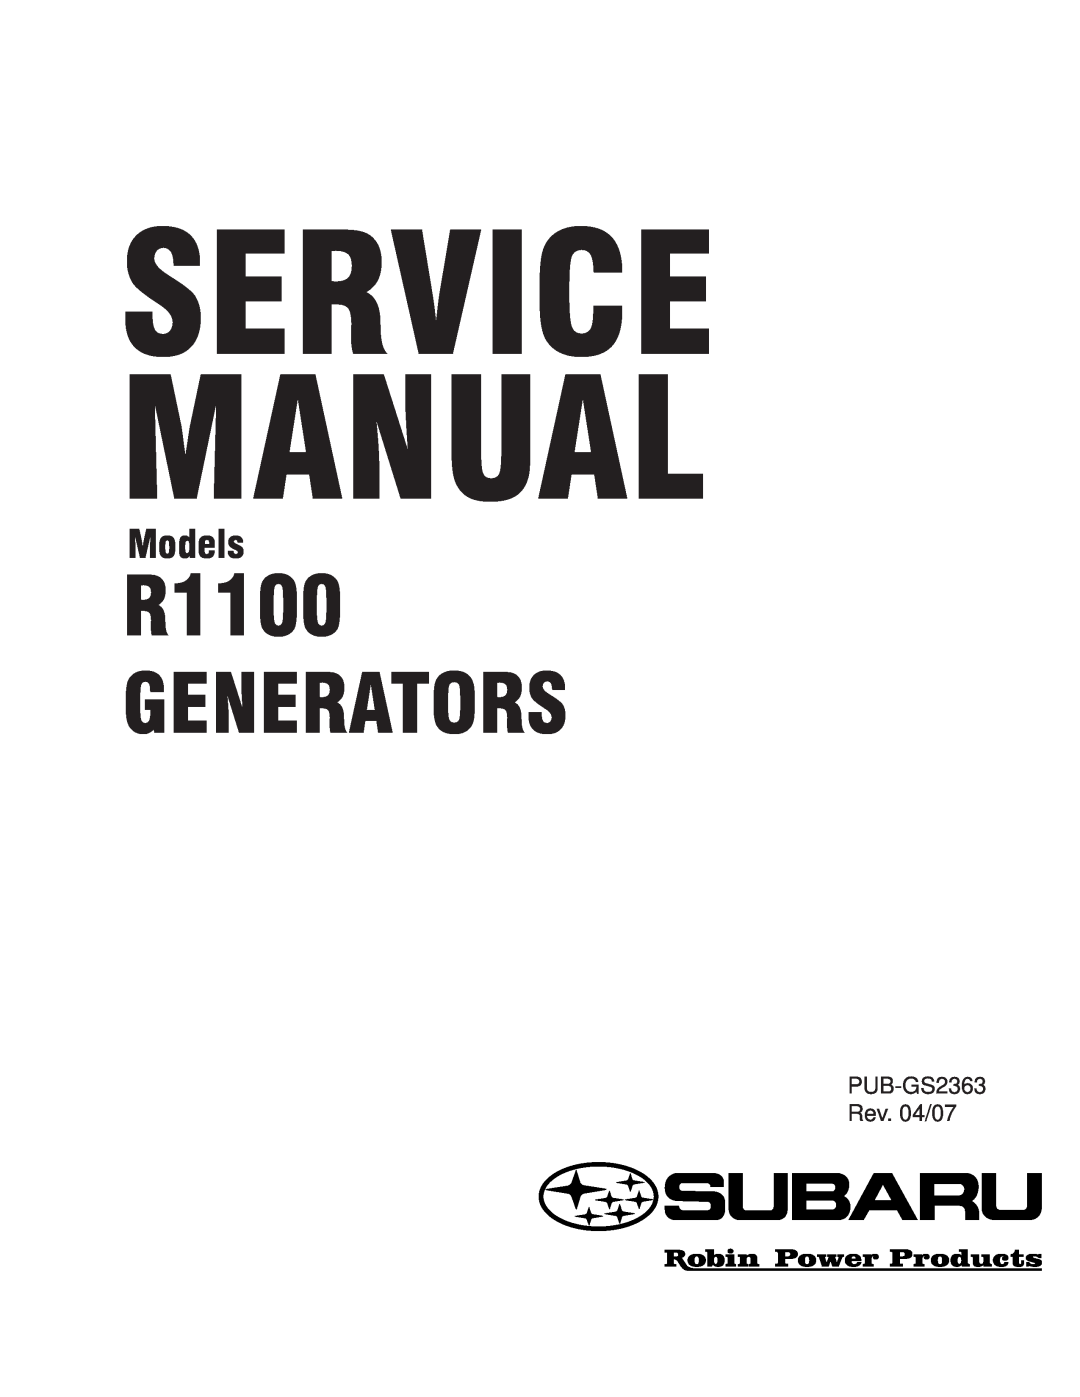 Subaru service manual R1100 GENERATORS, Models, PUB-GS2363 Rev. 04/07 